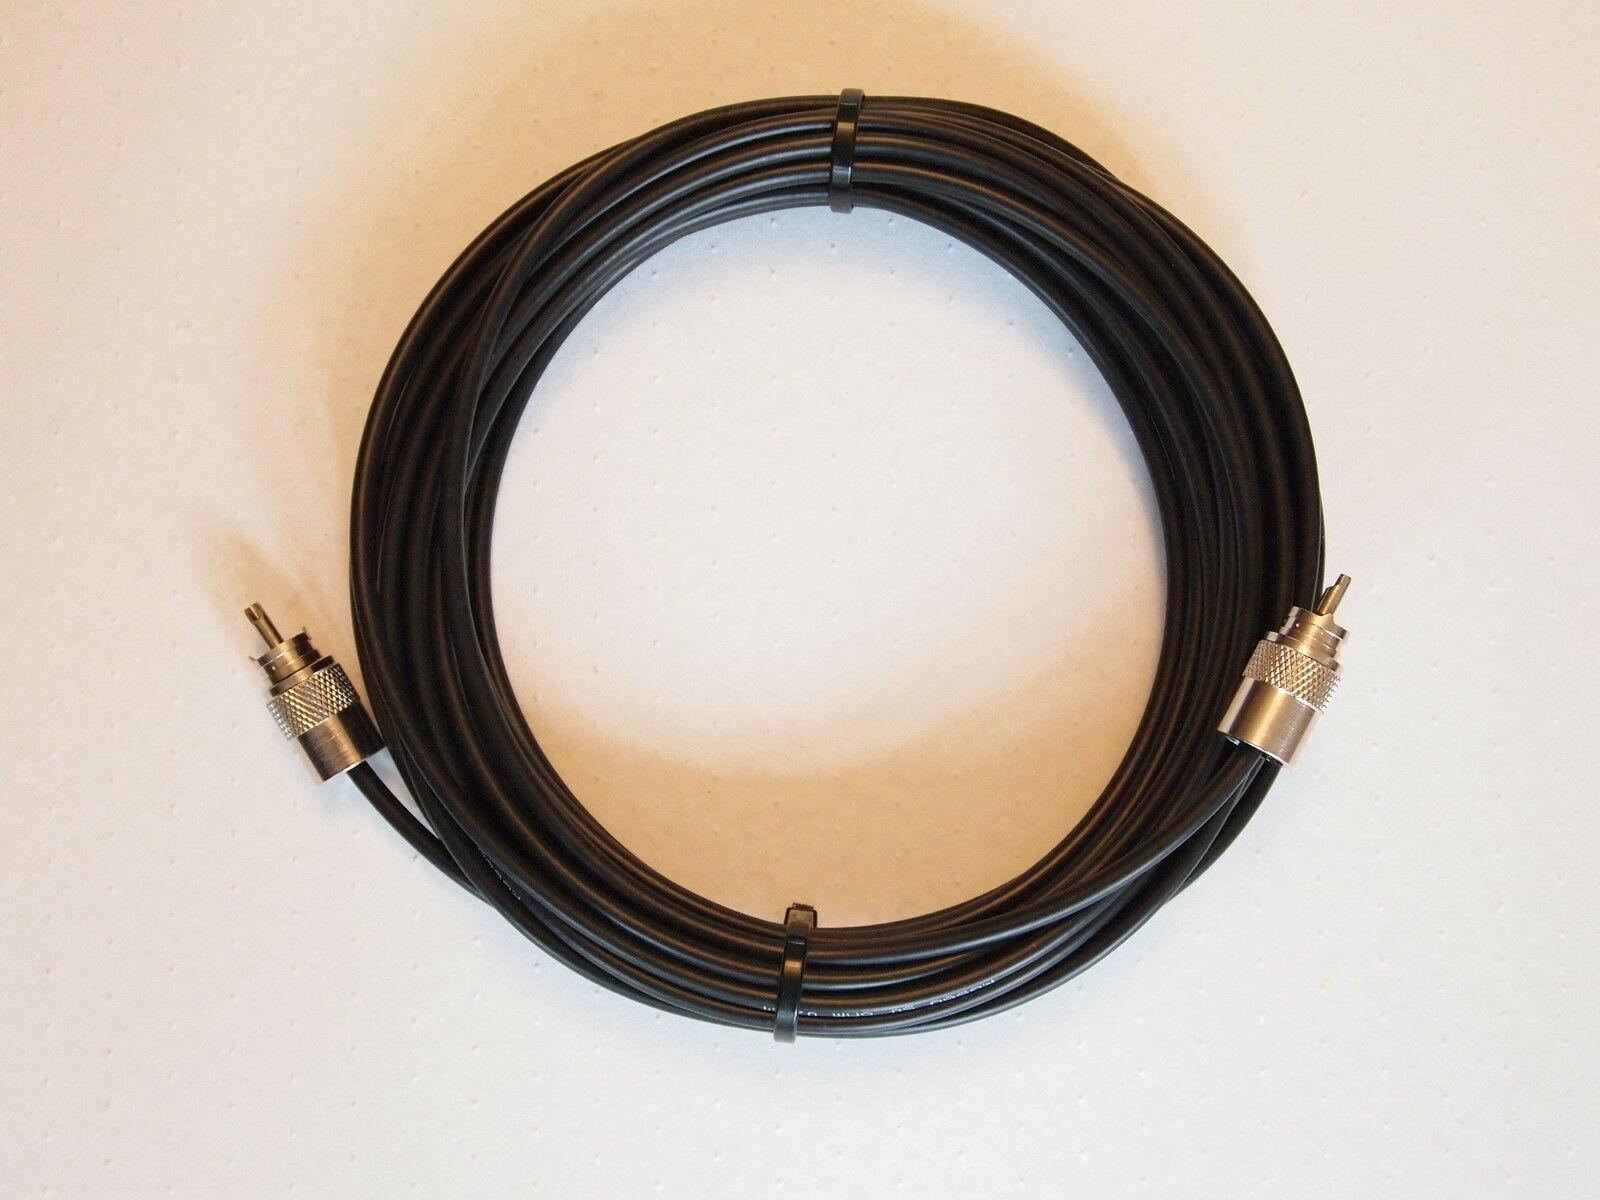 Sigma RG-58 Military Spec Coax cable 20 Metre Lead 2 x PL259 Male Connectors